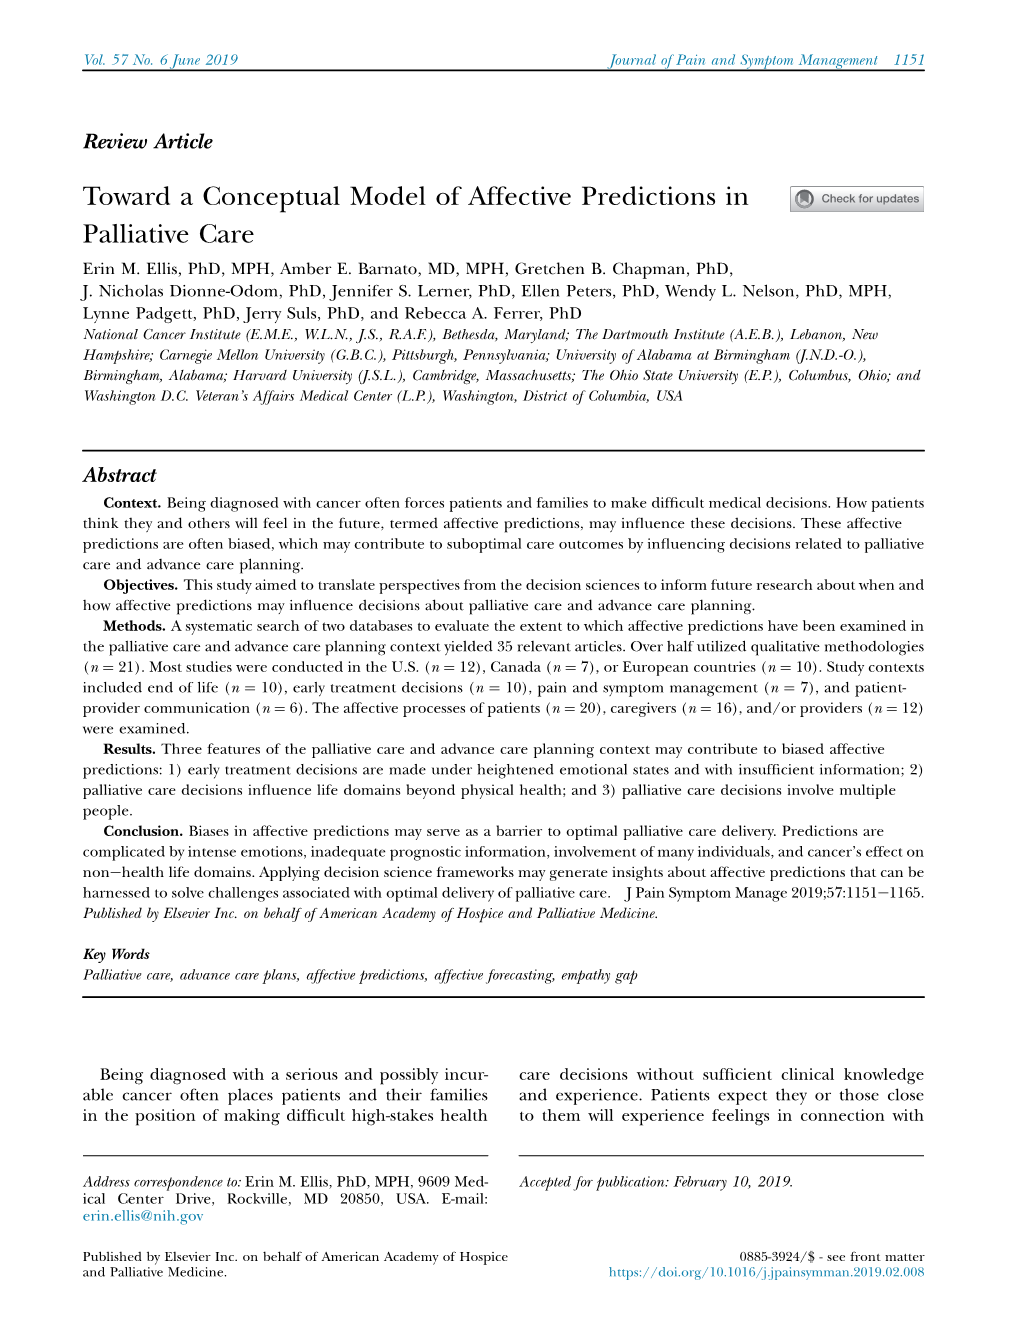 Toward a Conceptual Model of Affective Predictions in Palliative Care Erin M